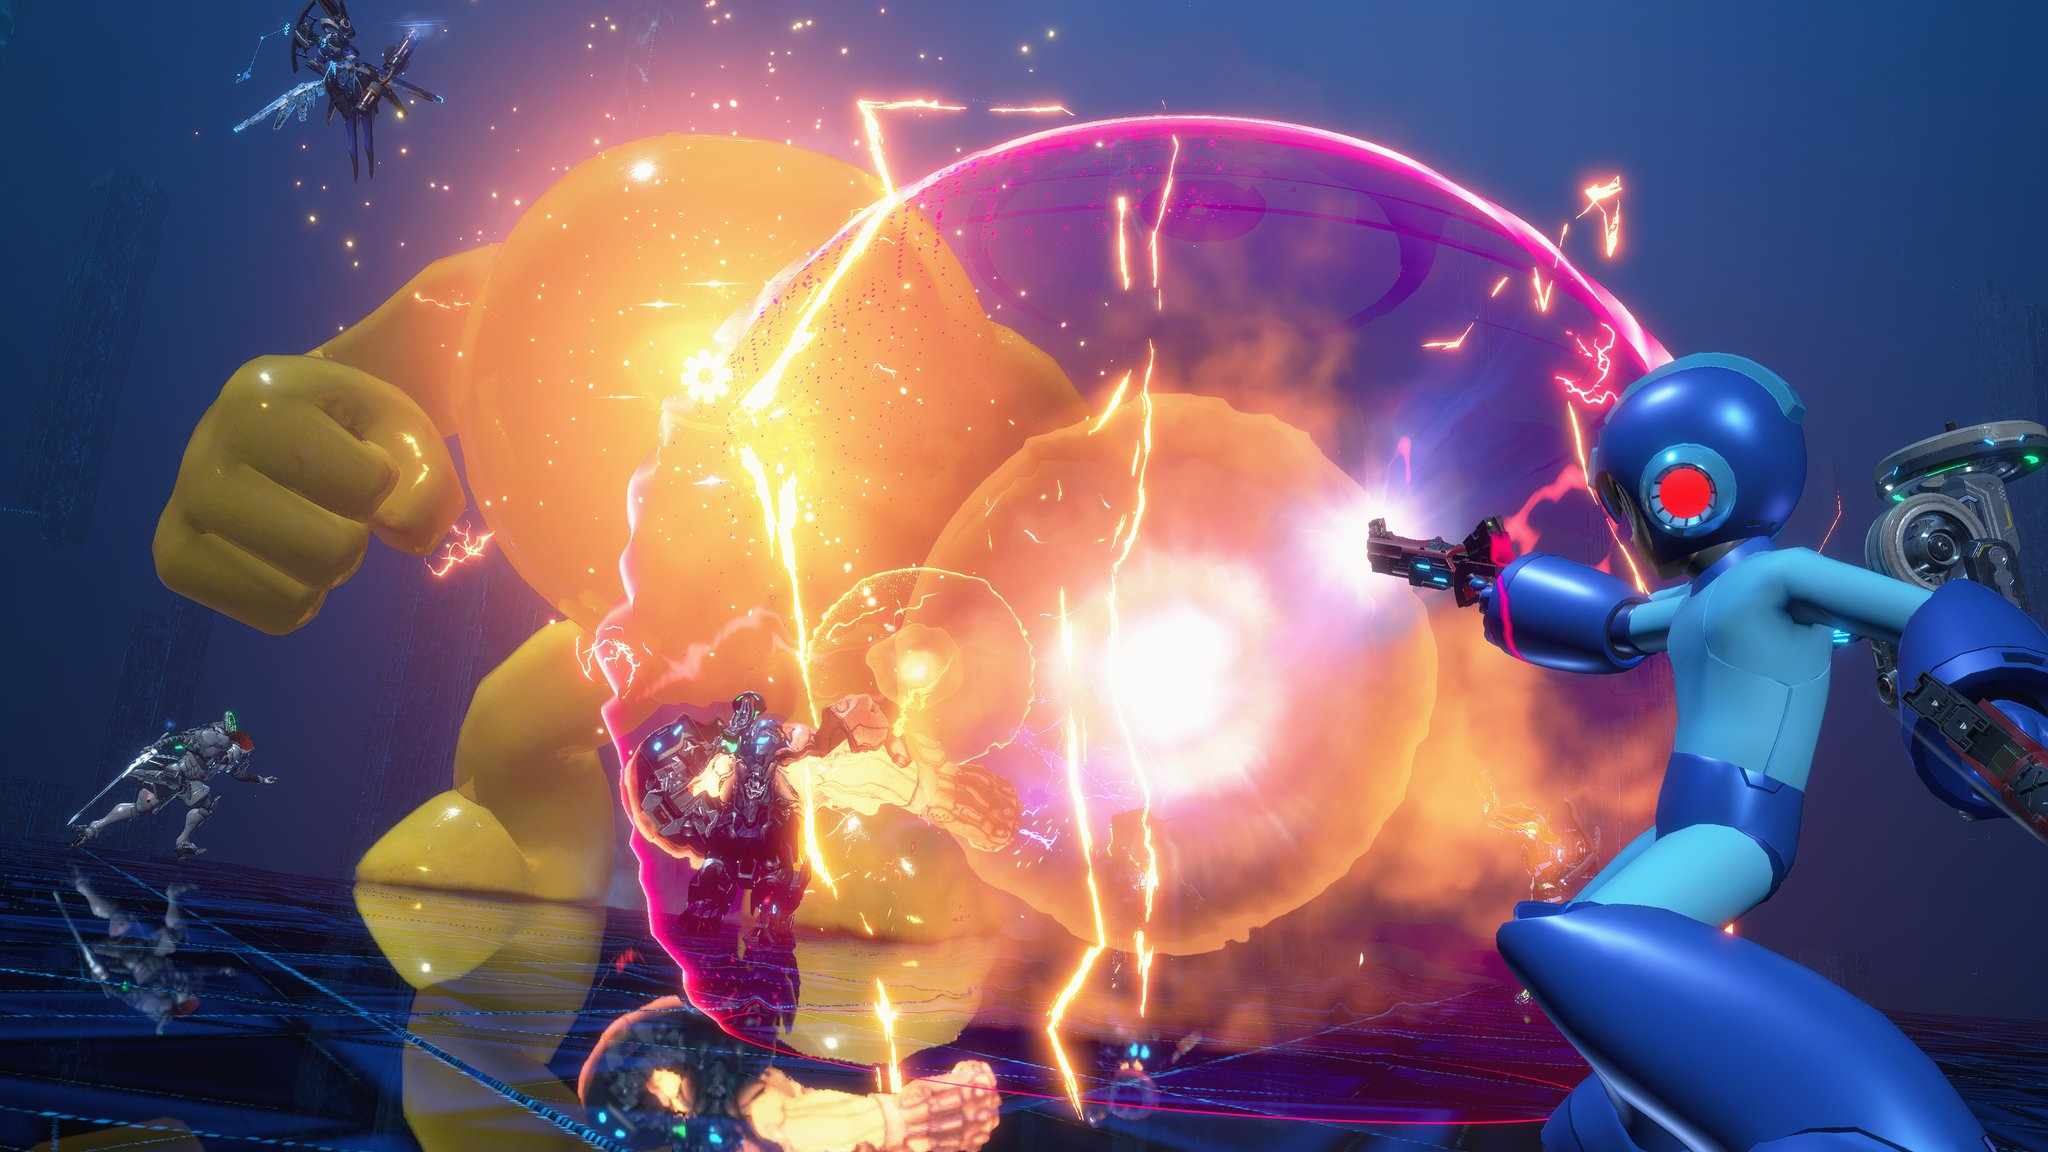 Exoprimal x Mega Man Collaboration Trailer Showcases Yellow Devil Boss Fight